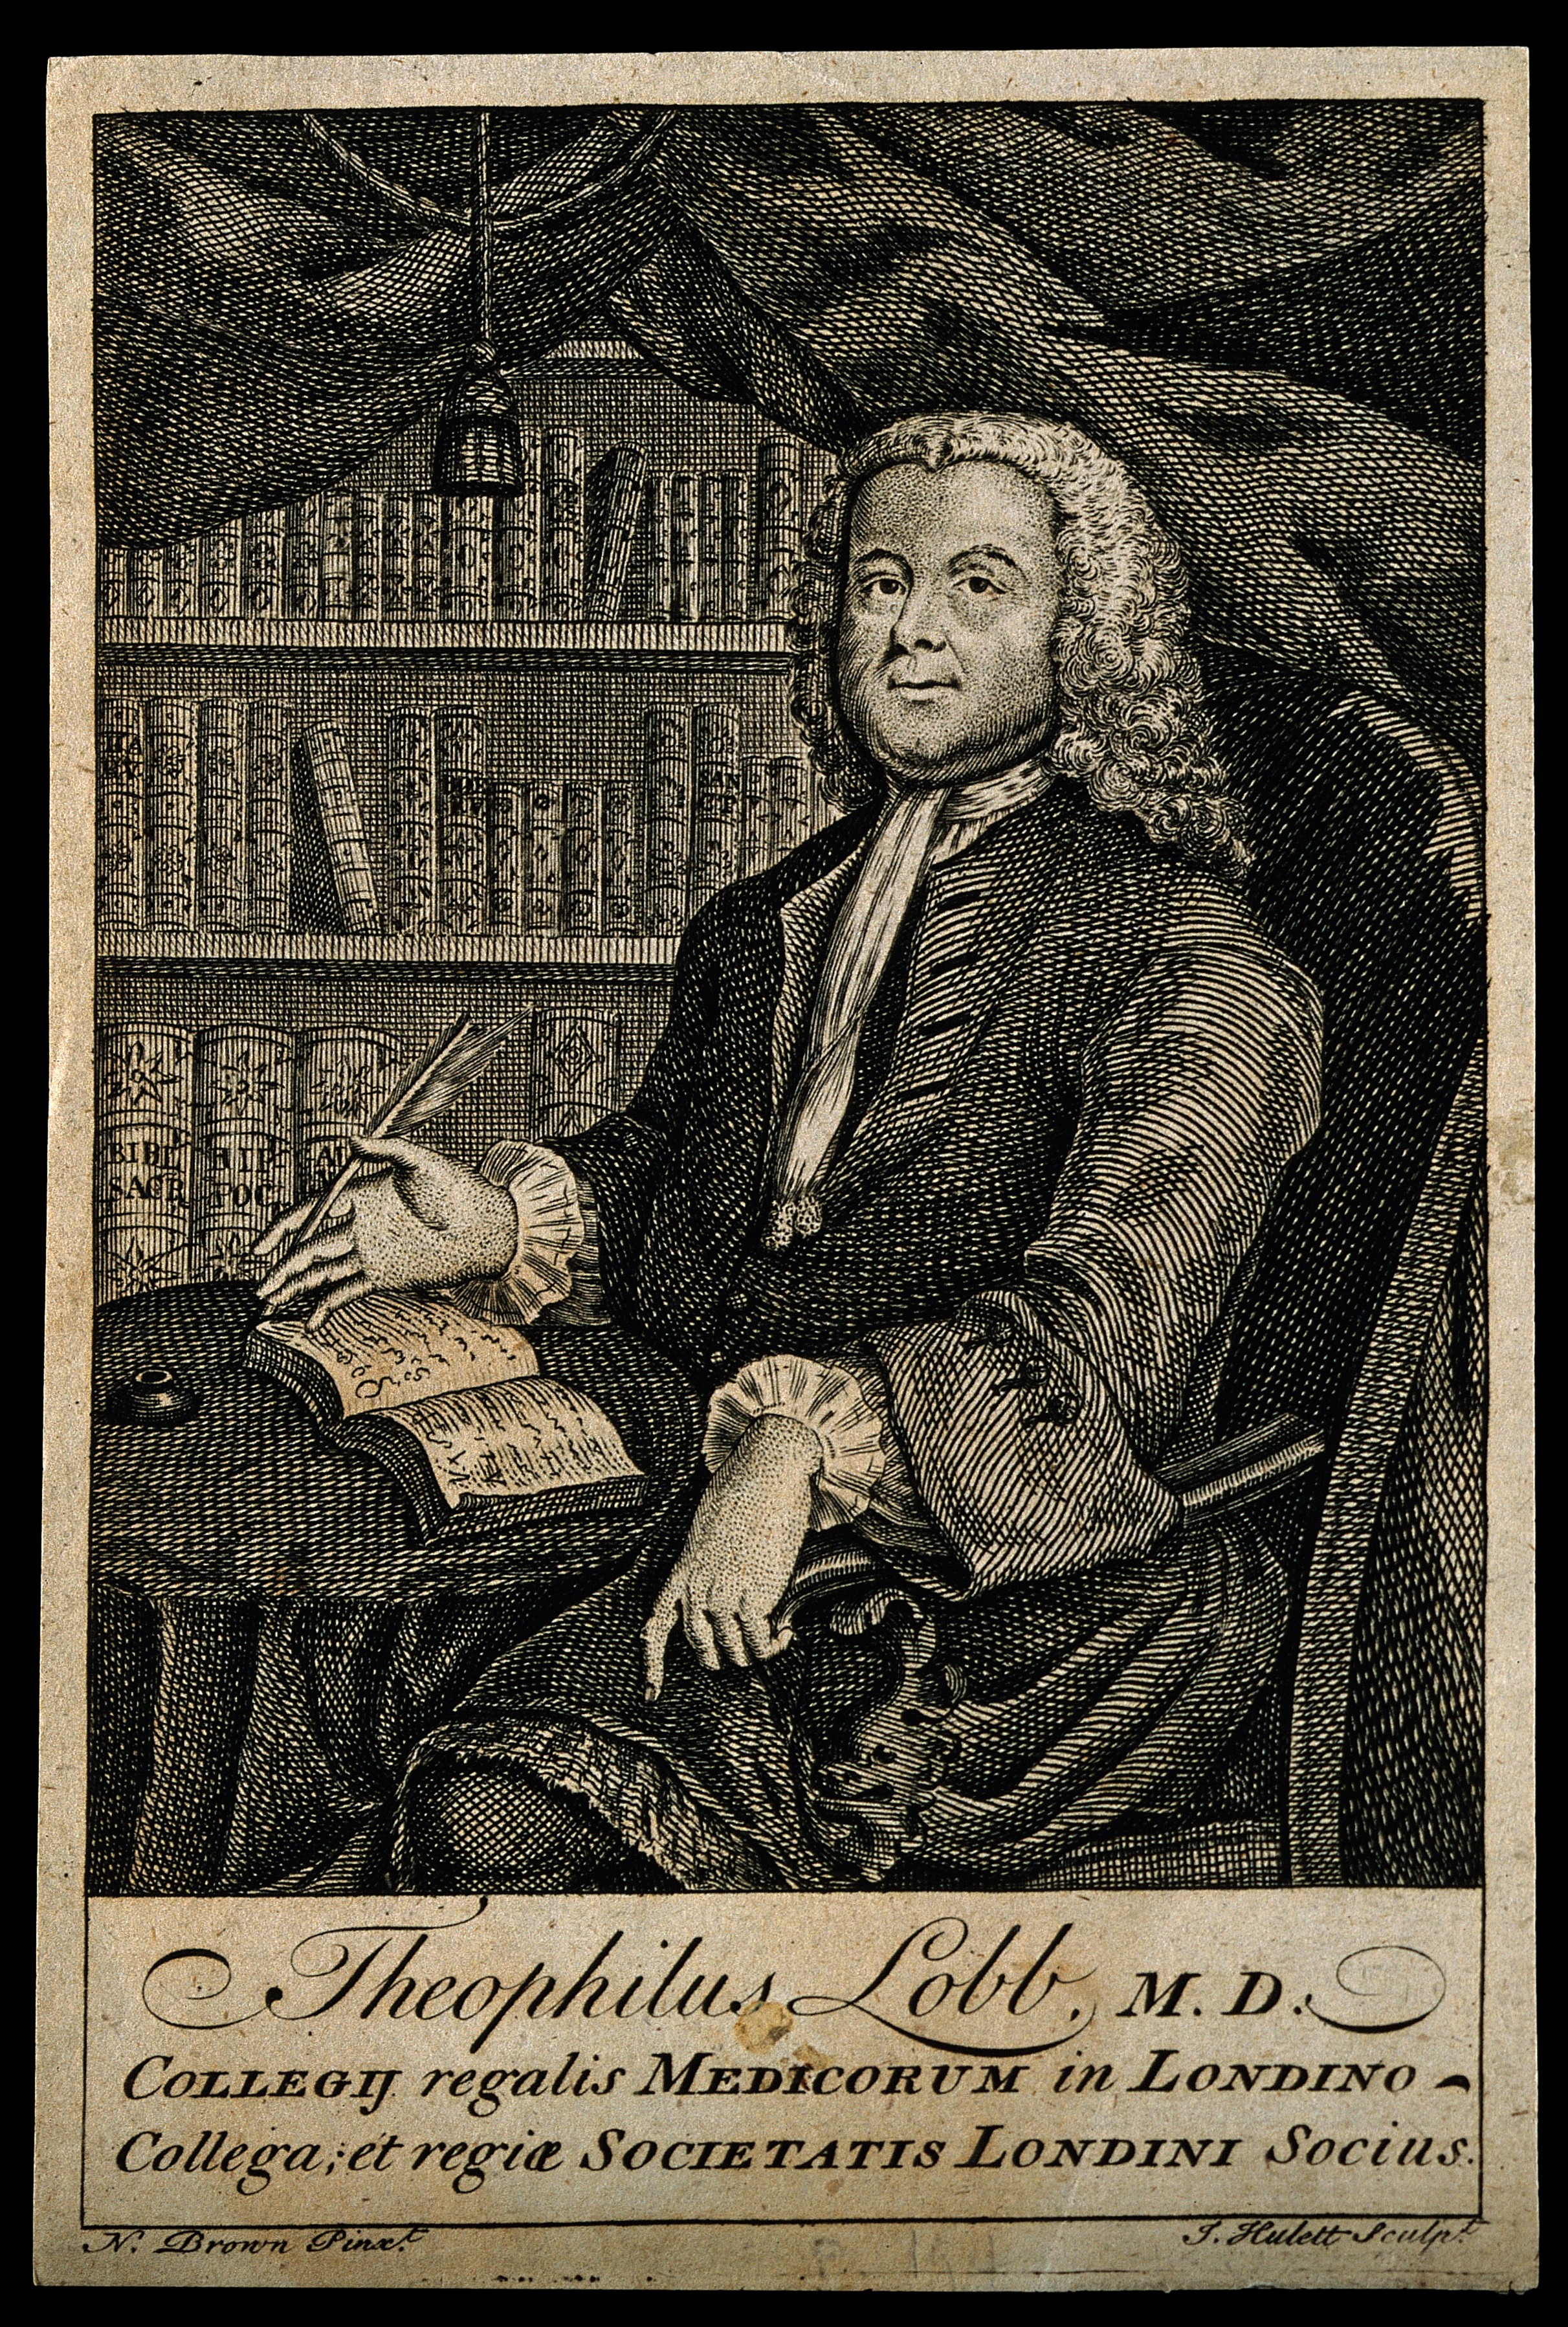 Theophilus Lobb, 1767 engraving